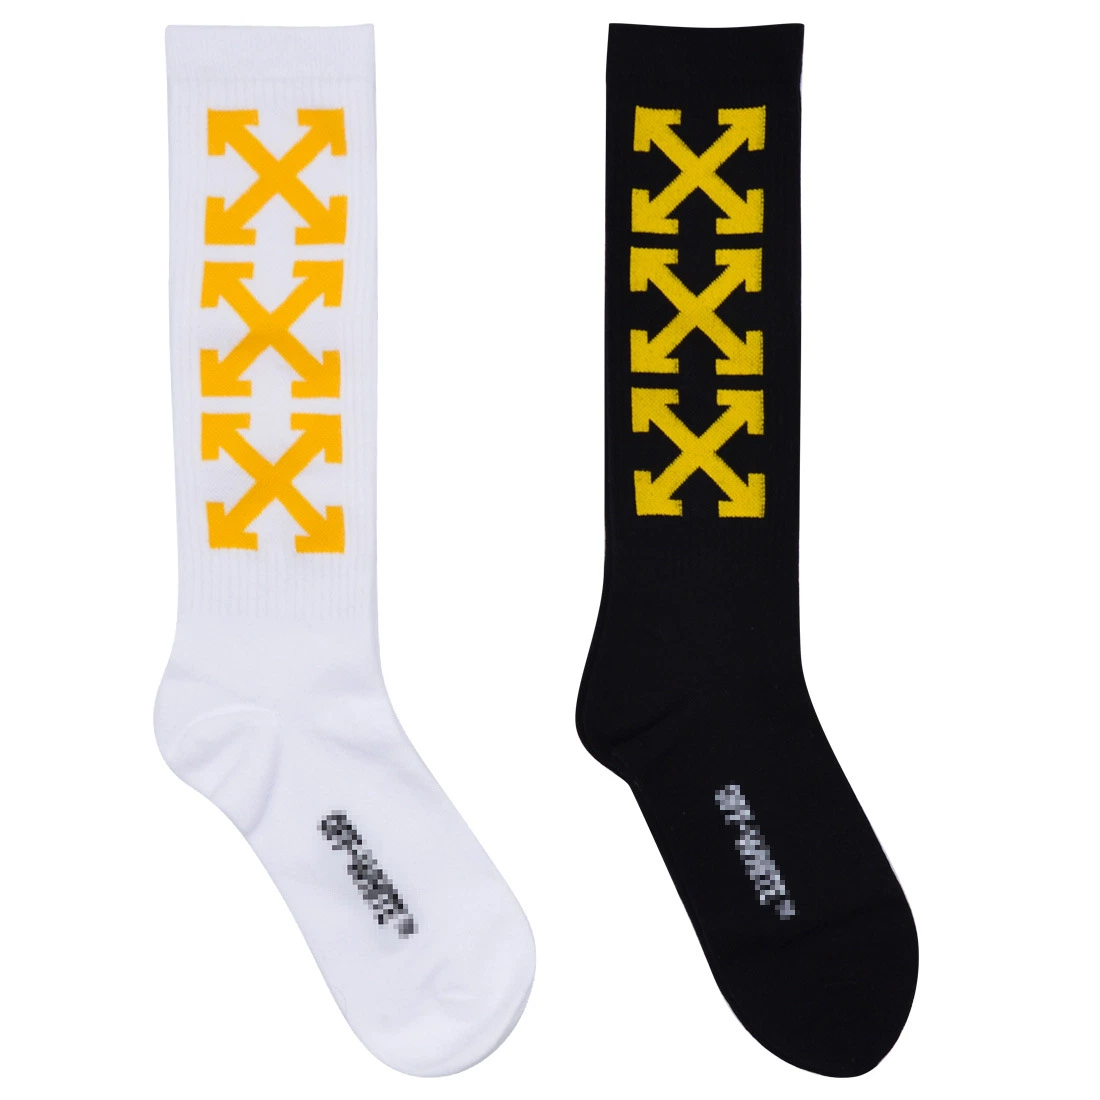 Unisex Hiphop Funny Socks off Arrow White Socks High Thigh Gift Socks